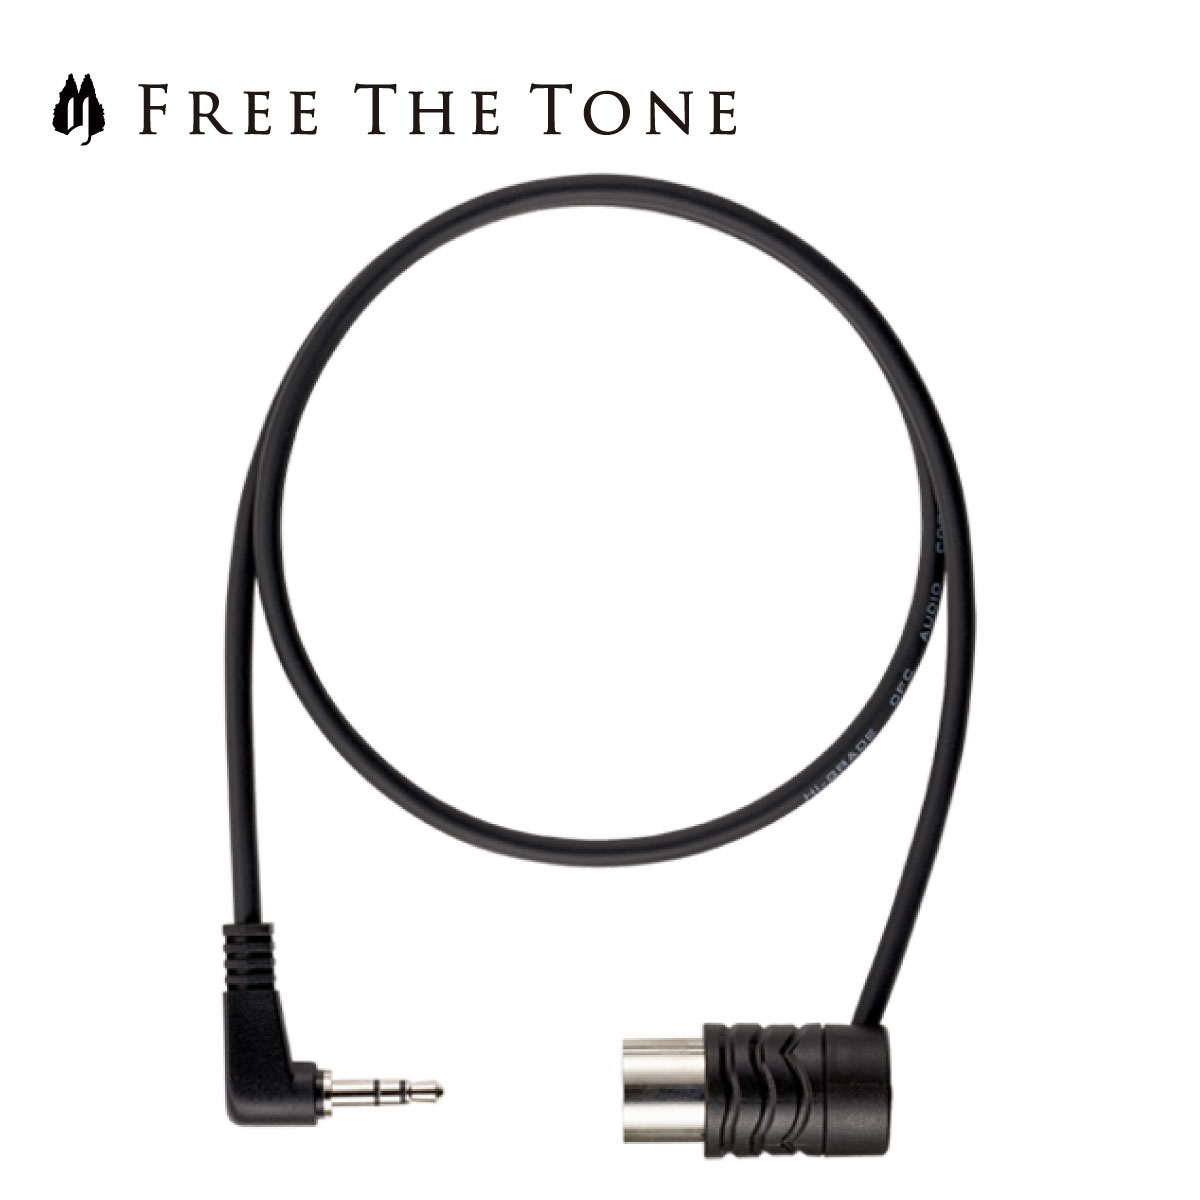 Free The Tone 公式 MIDI CABLE 早い者勝ち 50cm フリーザトーン MIDIケーブル 新品 CM-3510-TRS